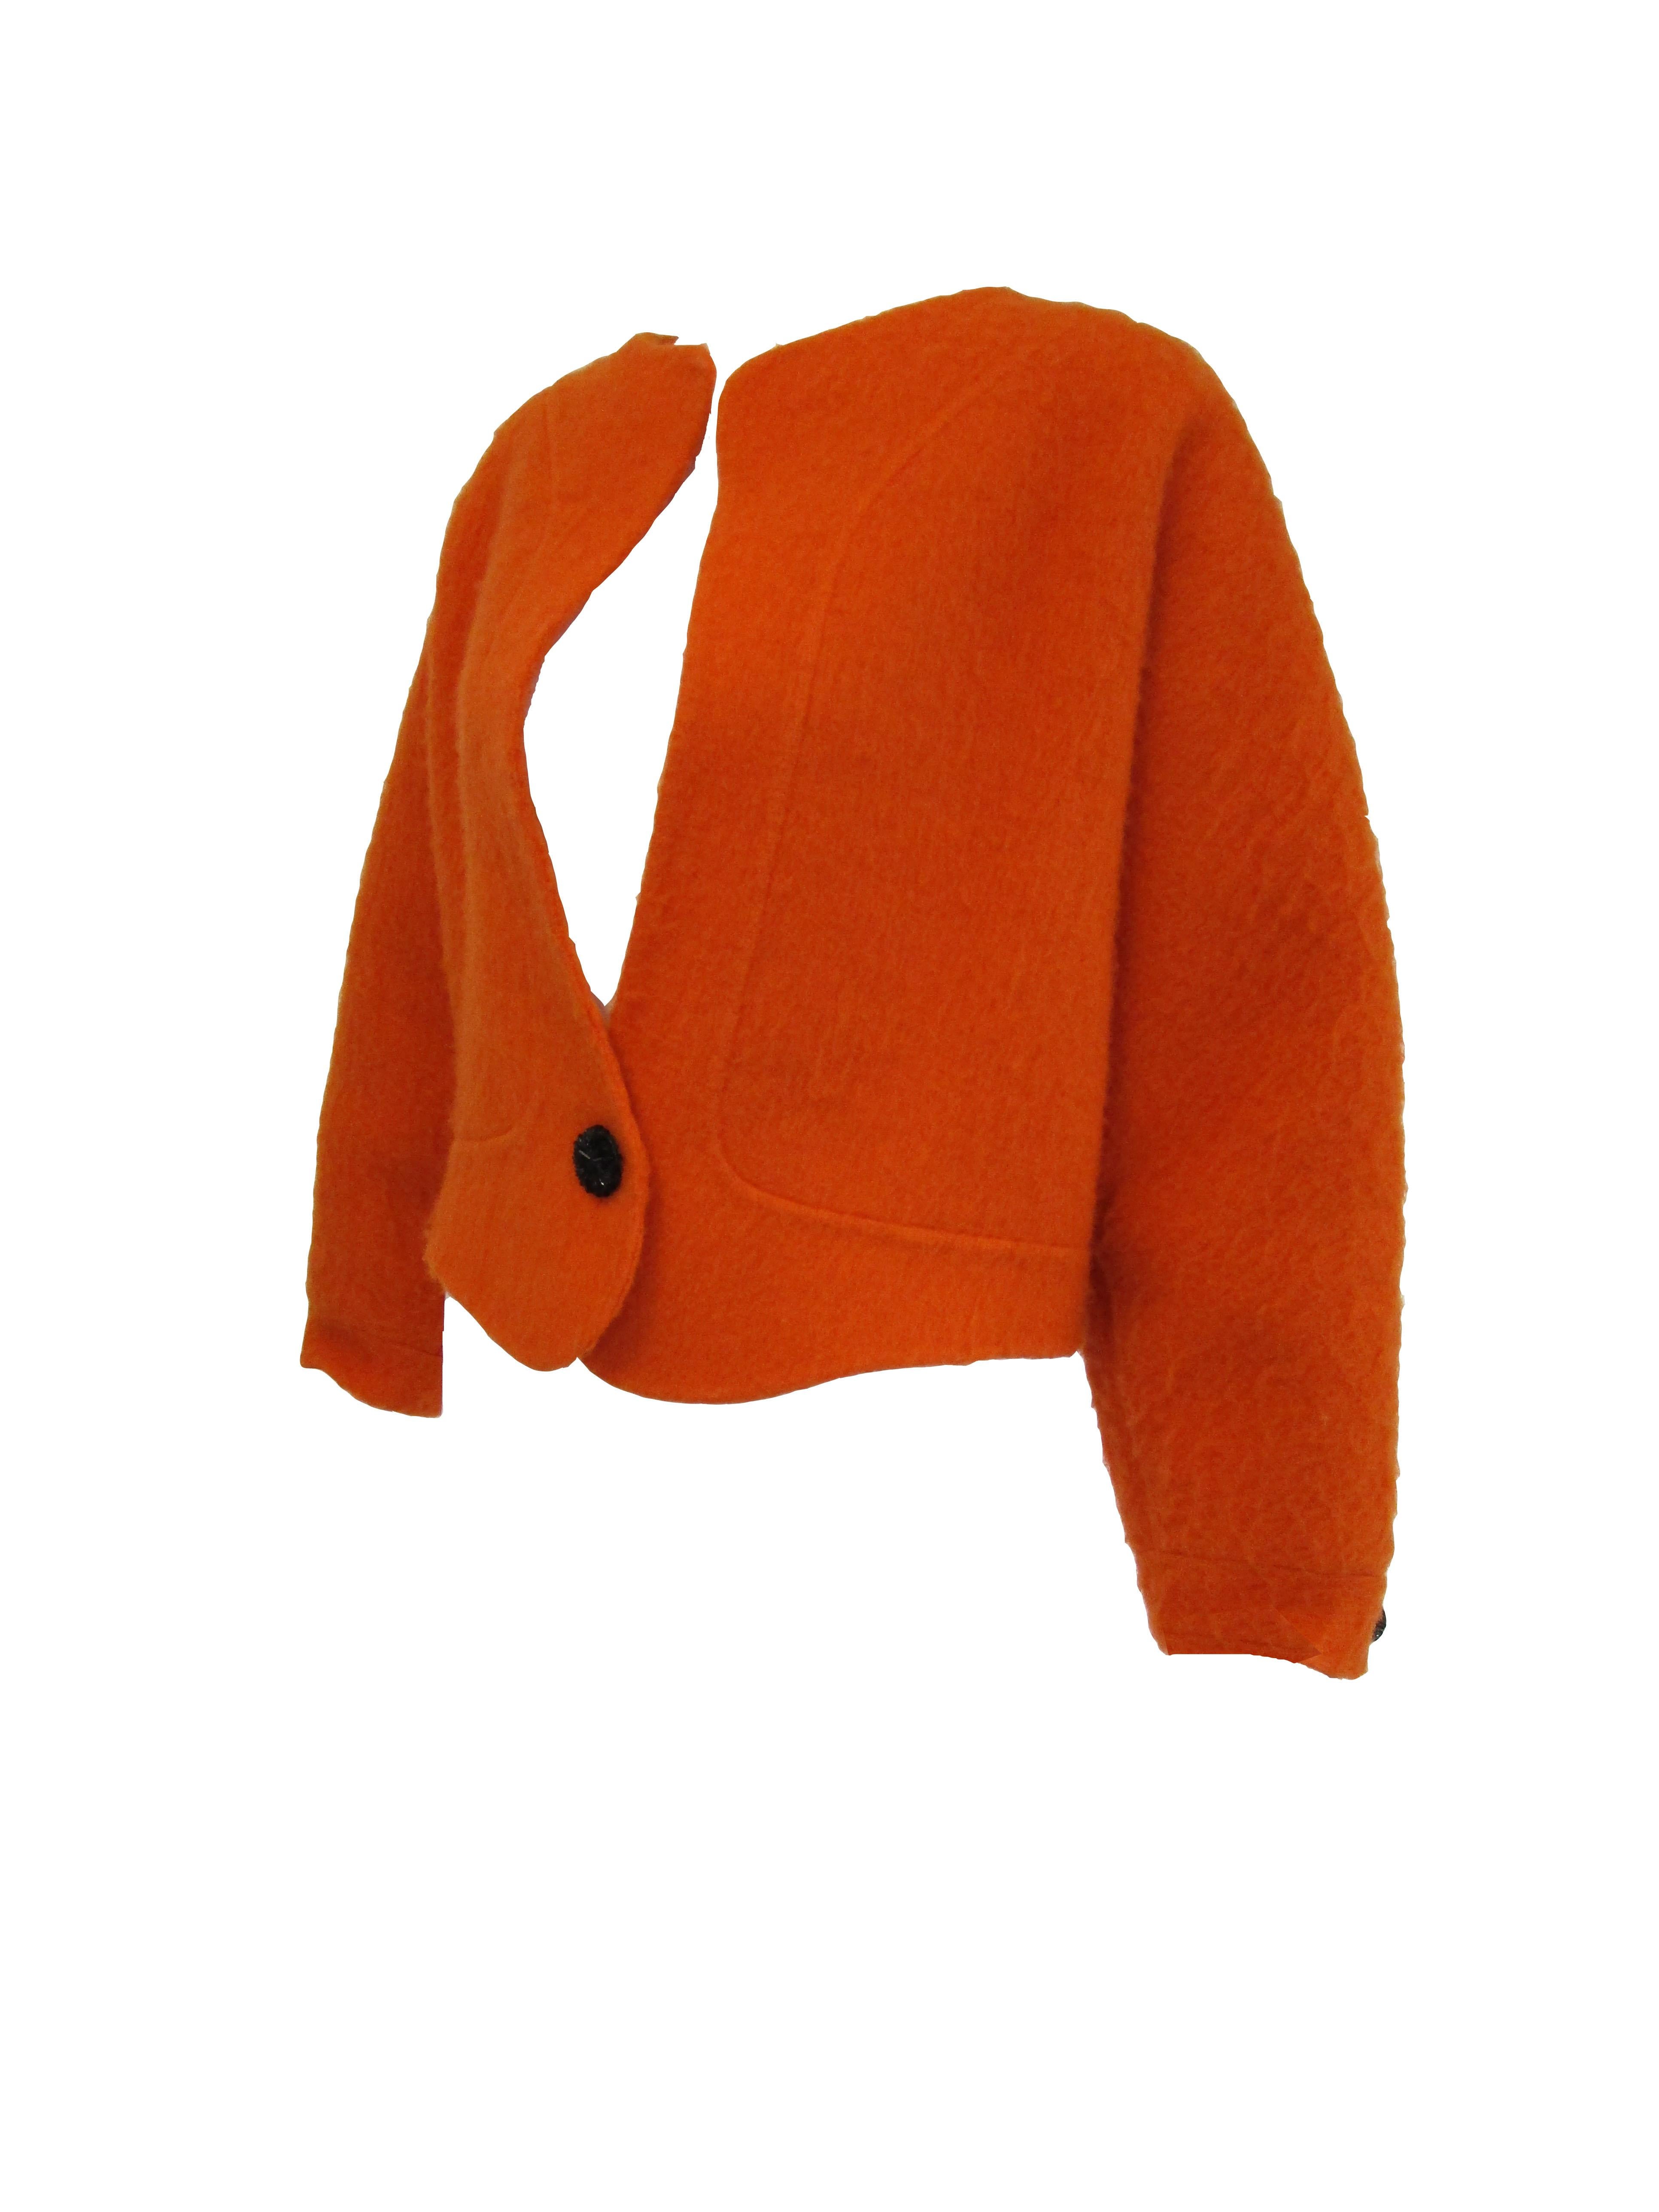  1990s Geoffery Beene Bright Orange Mohair Jacket - Cropped  For Sale 1